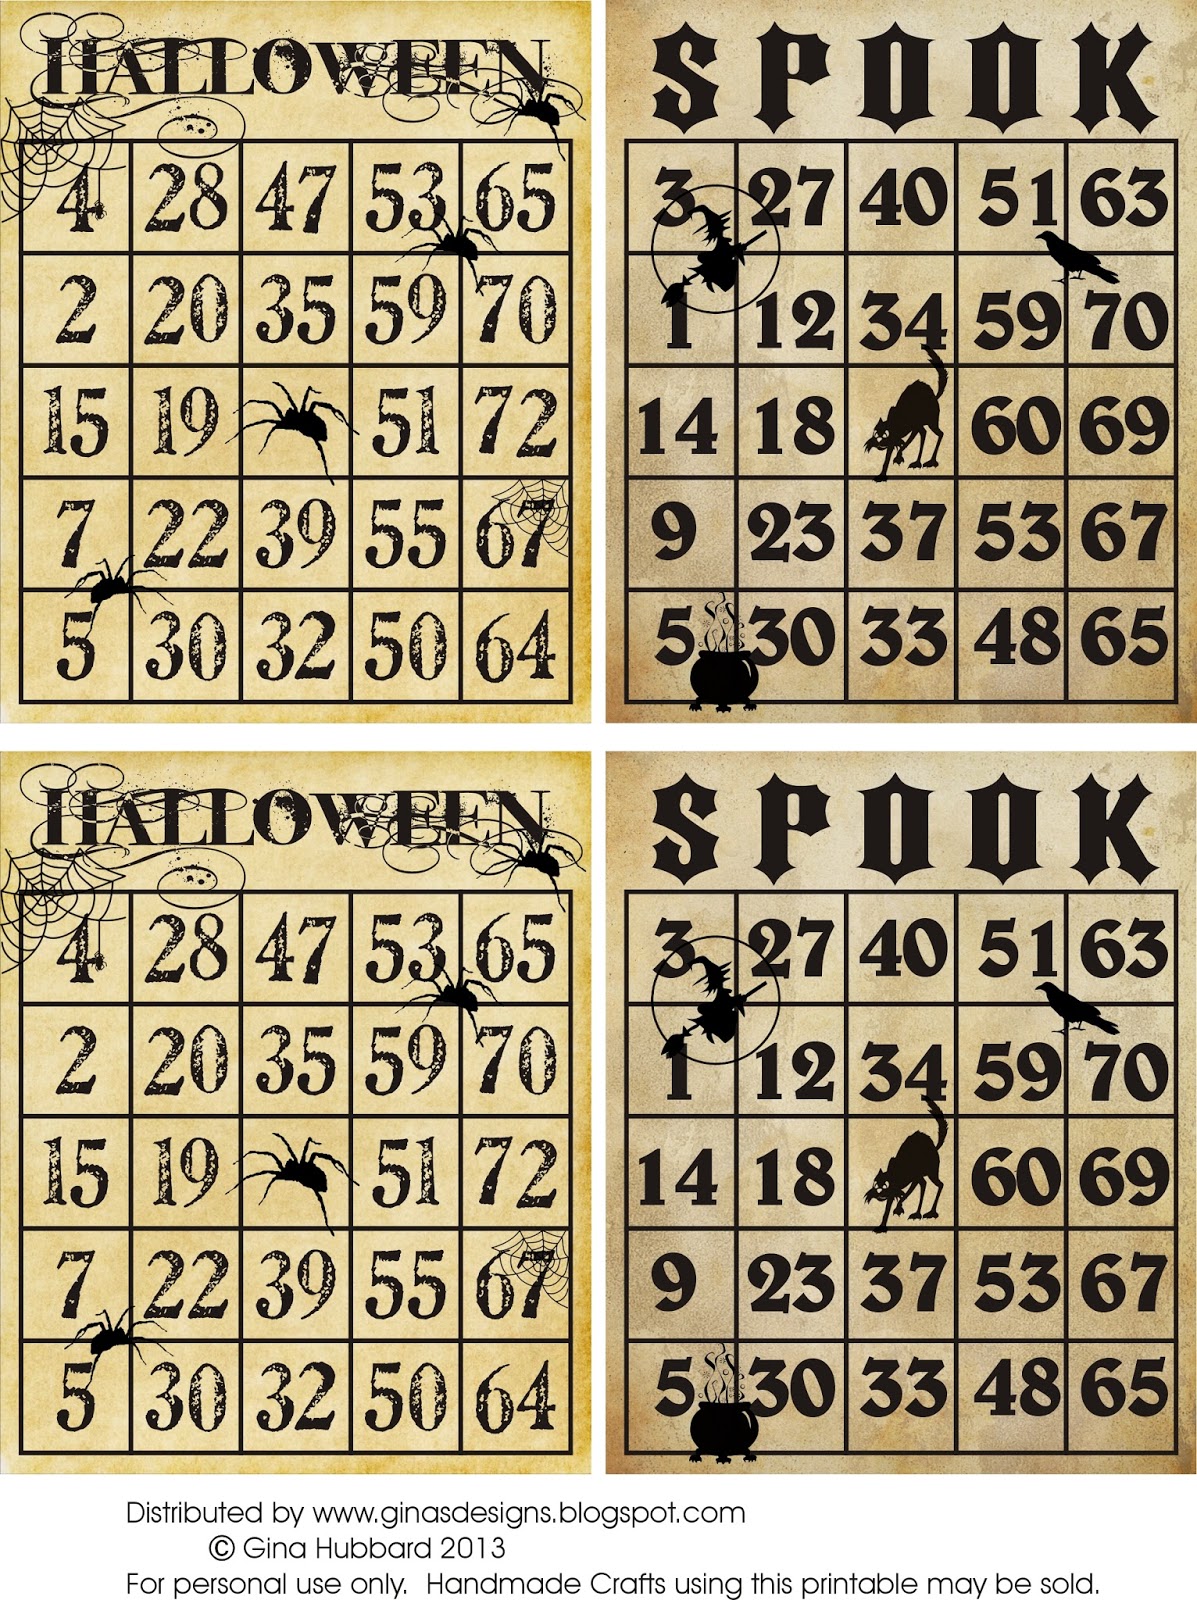 ginas-designs-freebie-friday-vintage-halloween-bingo-cards